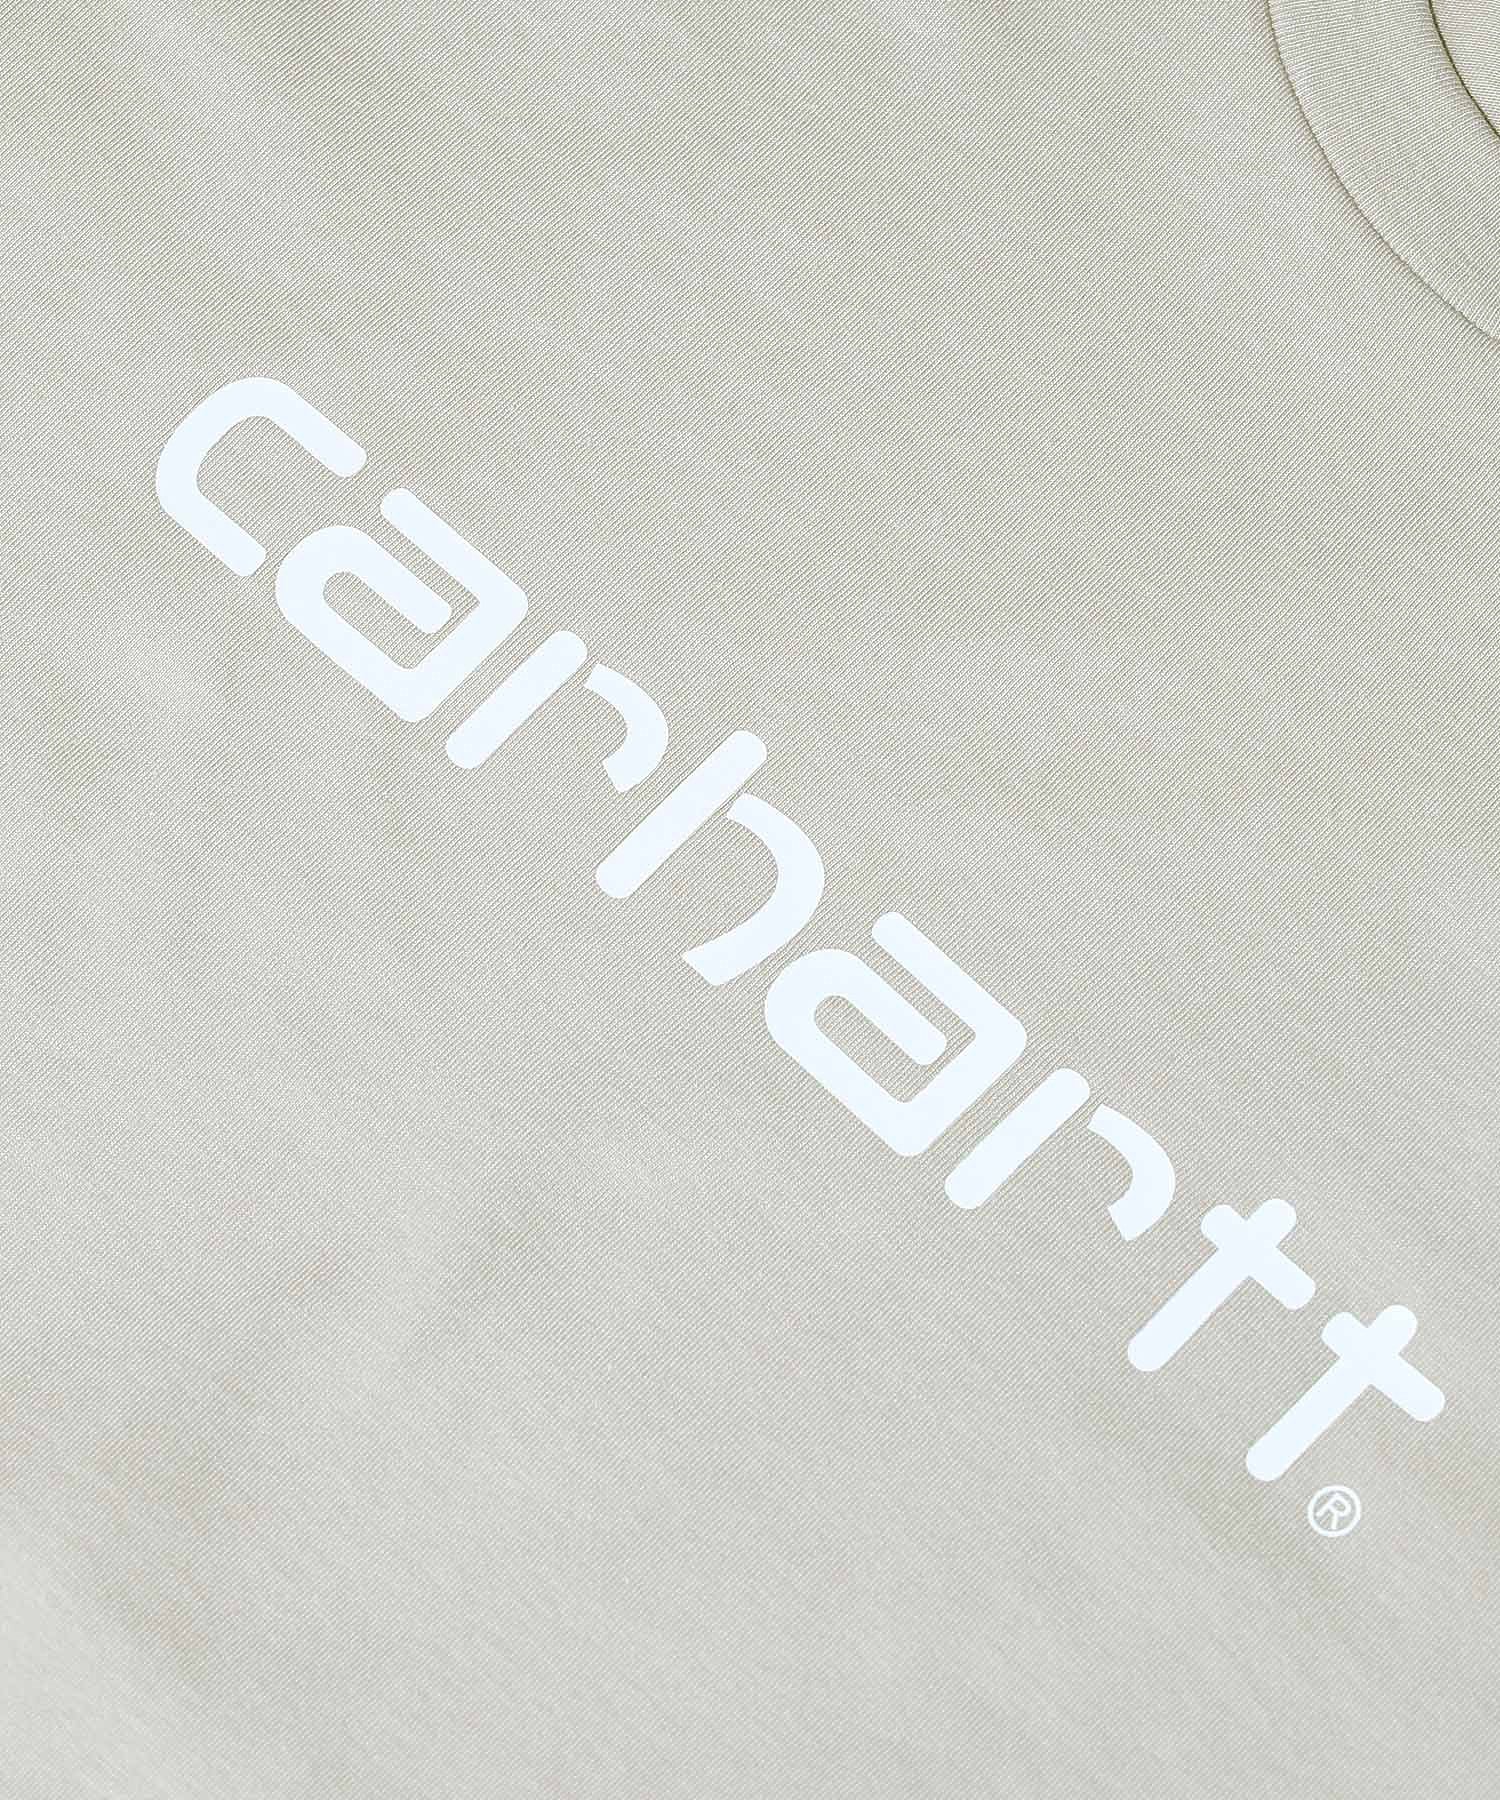 Carhartt /カーハート/ S/S SCRIPT EMBROIDERY T-SHIRT I030435